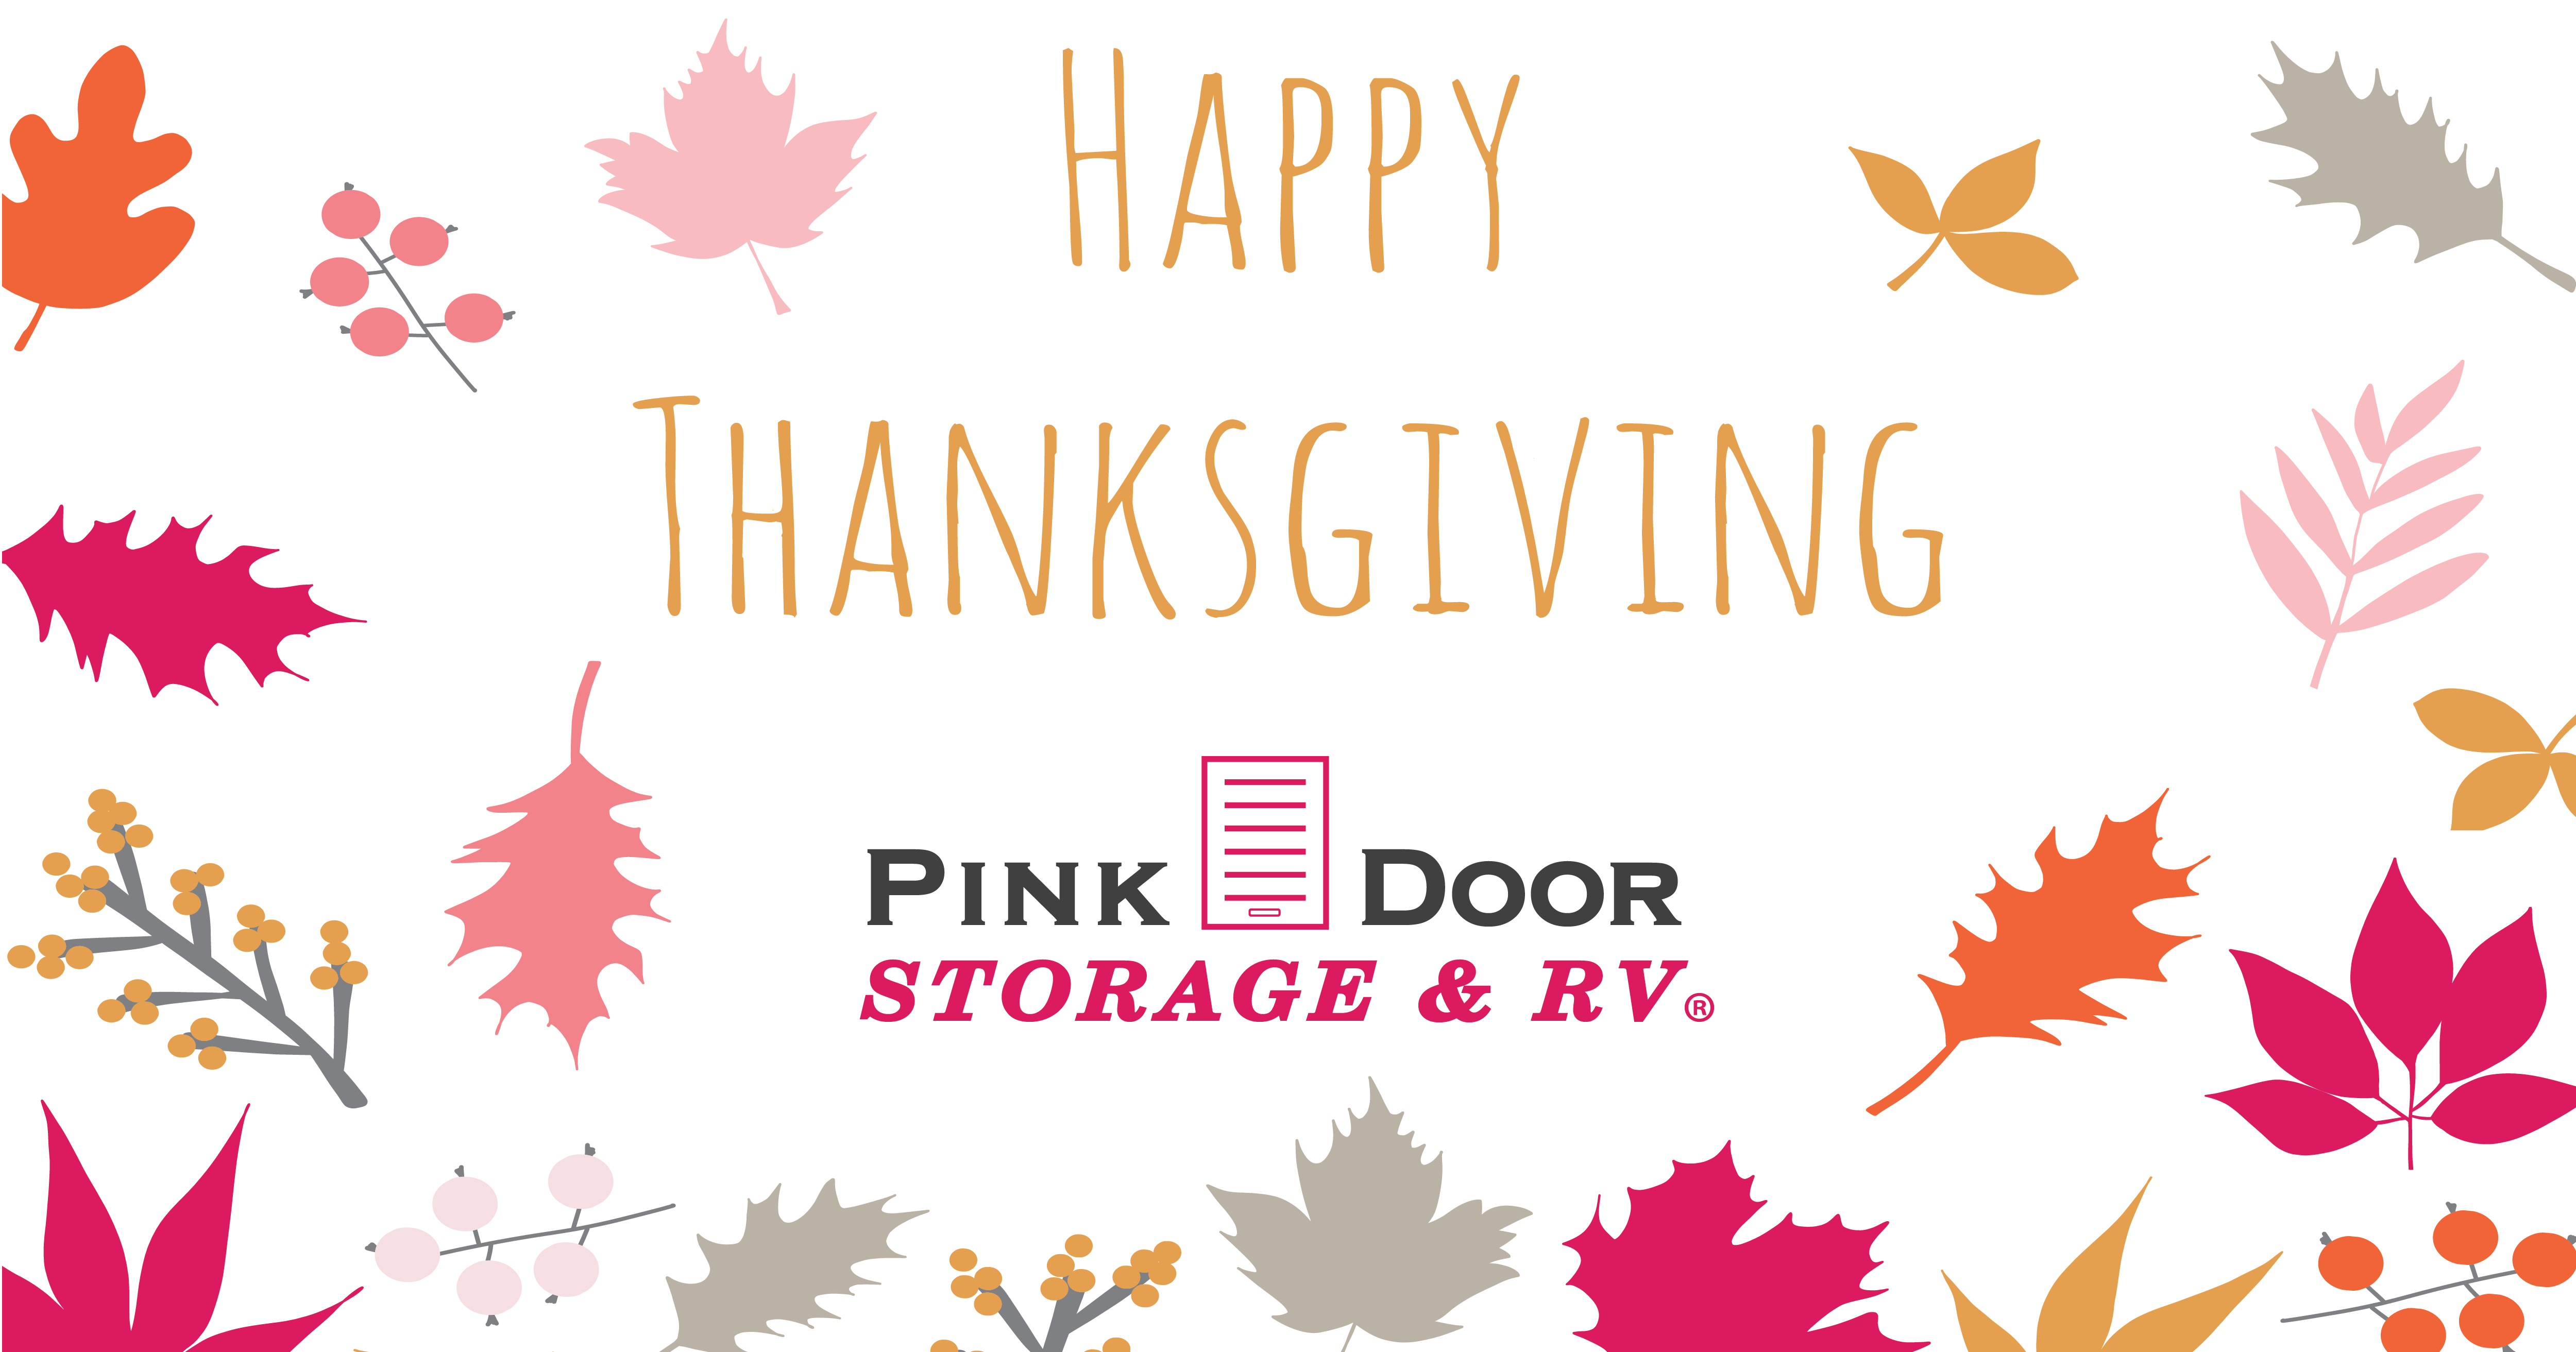 Pink Door Storage & RV - Happy Thanksgiving